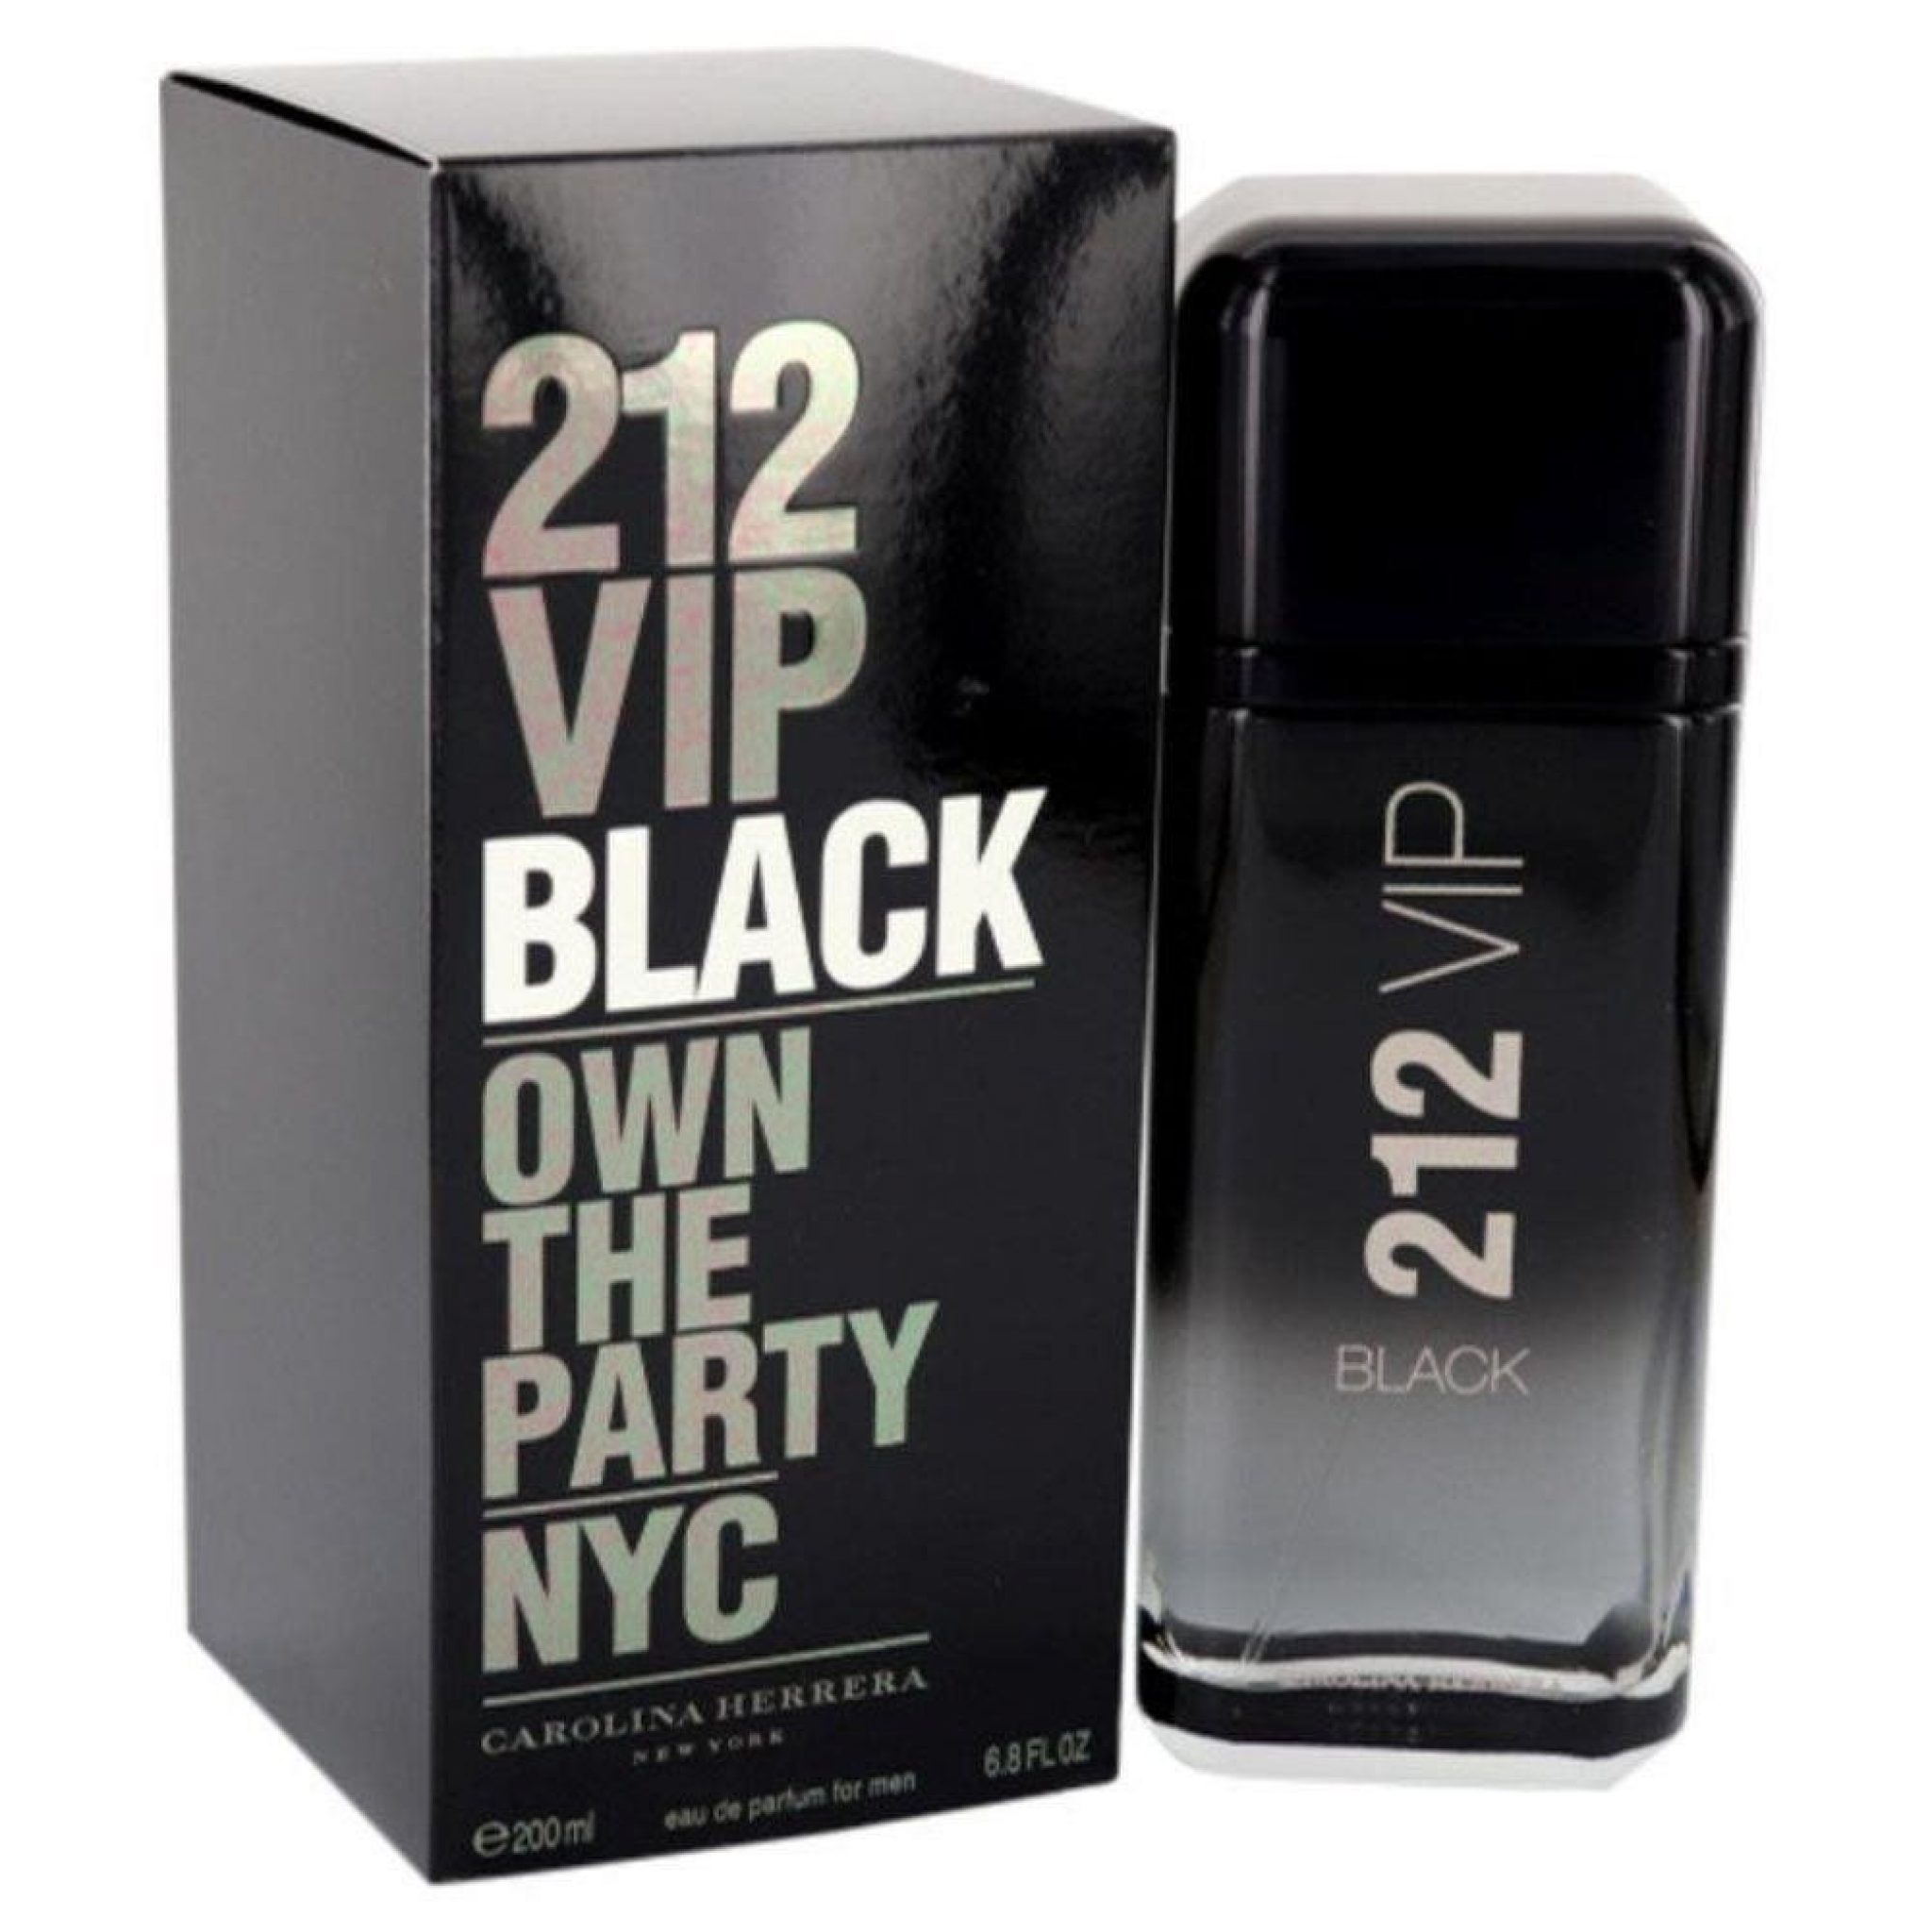 Мужской парфюм 212. Carolina Herrera 212 VIP Black, 100 ml. 212 Вип Блэк мужские.